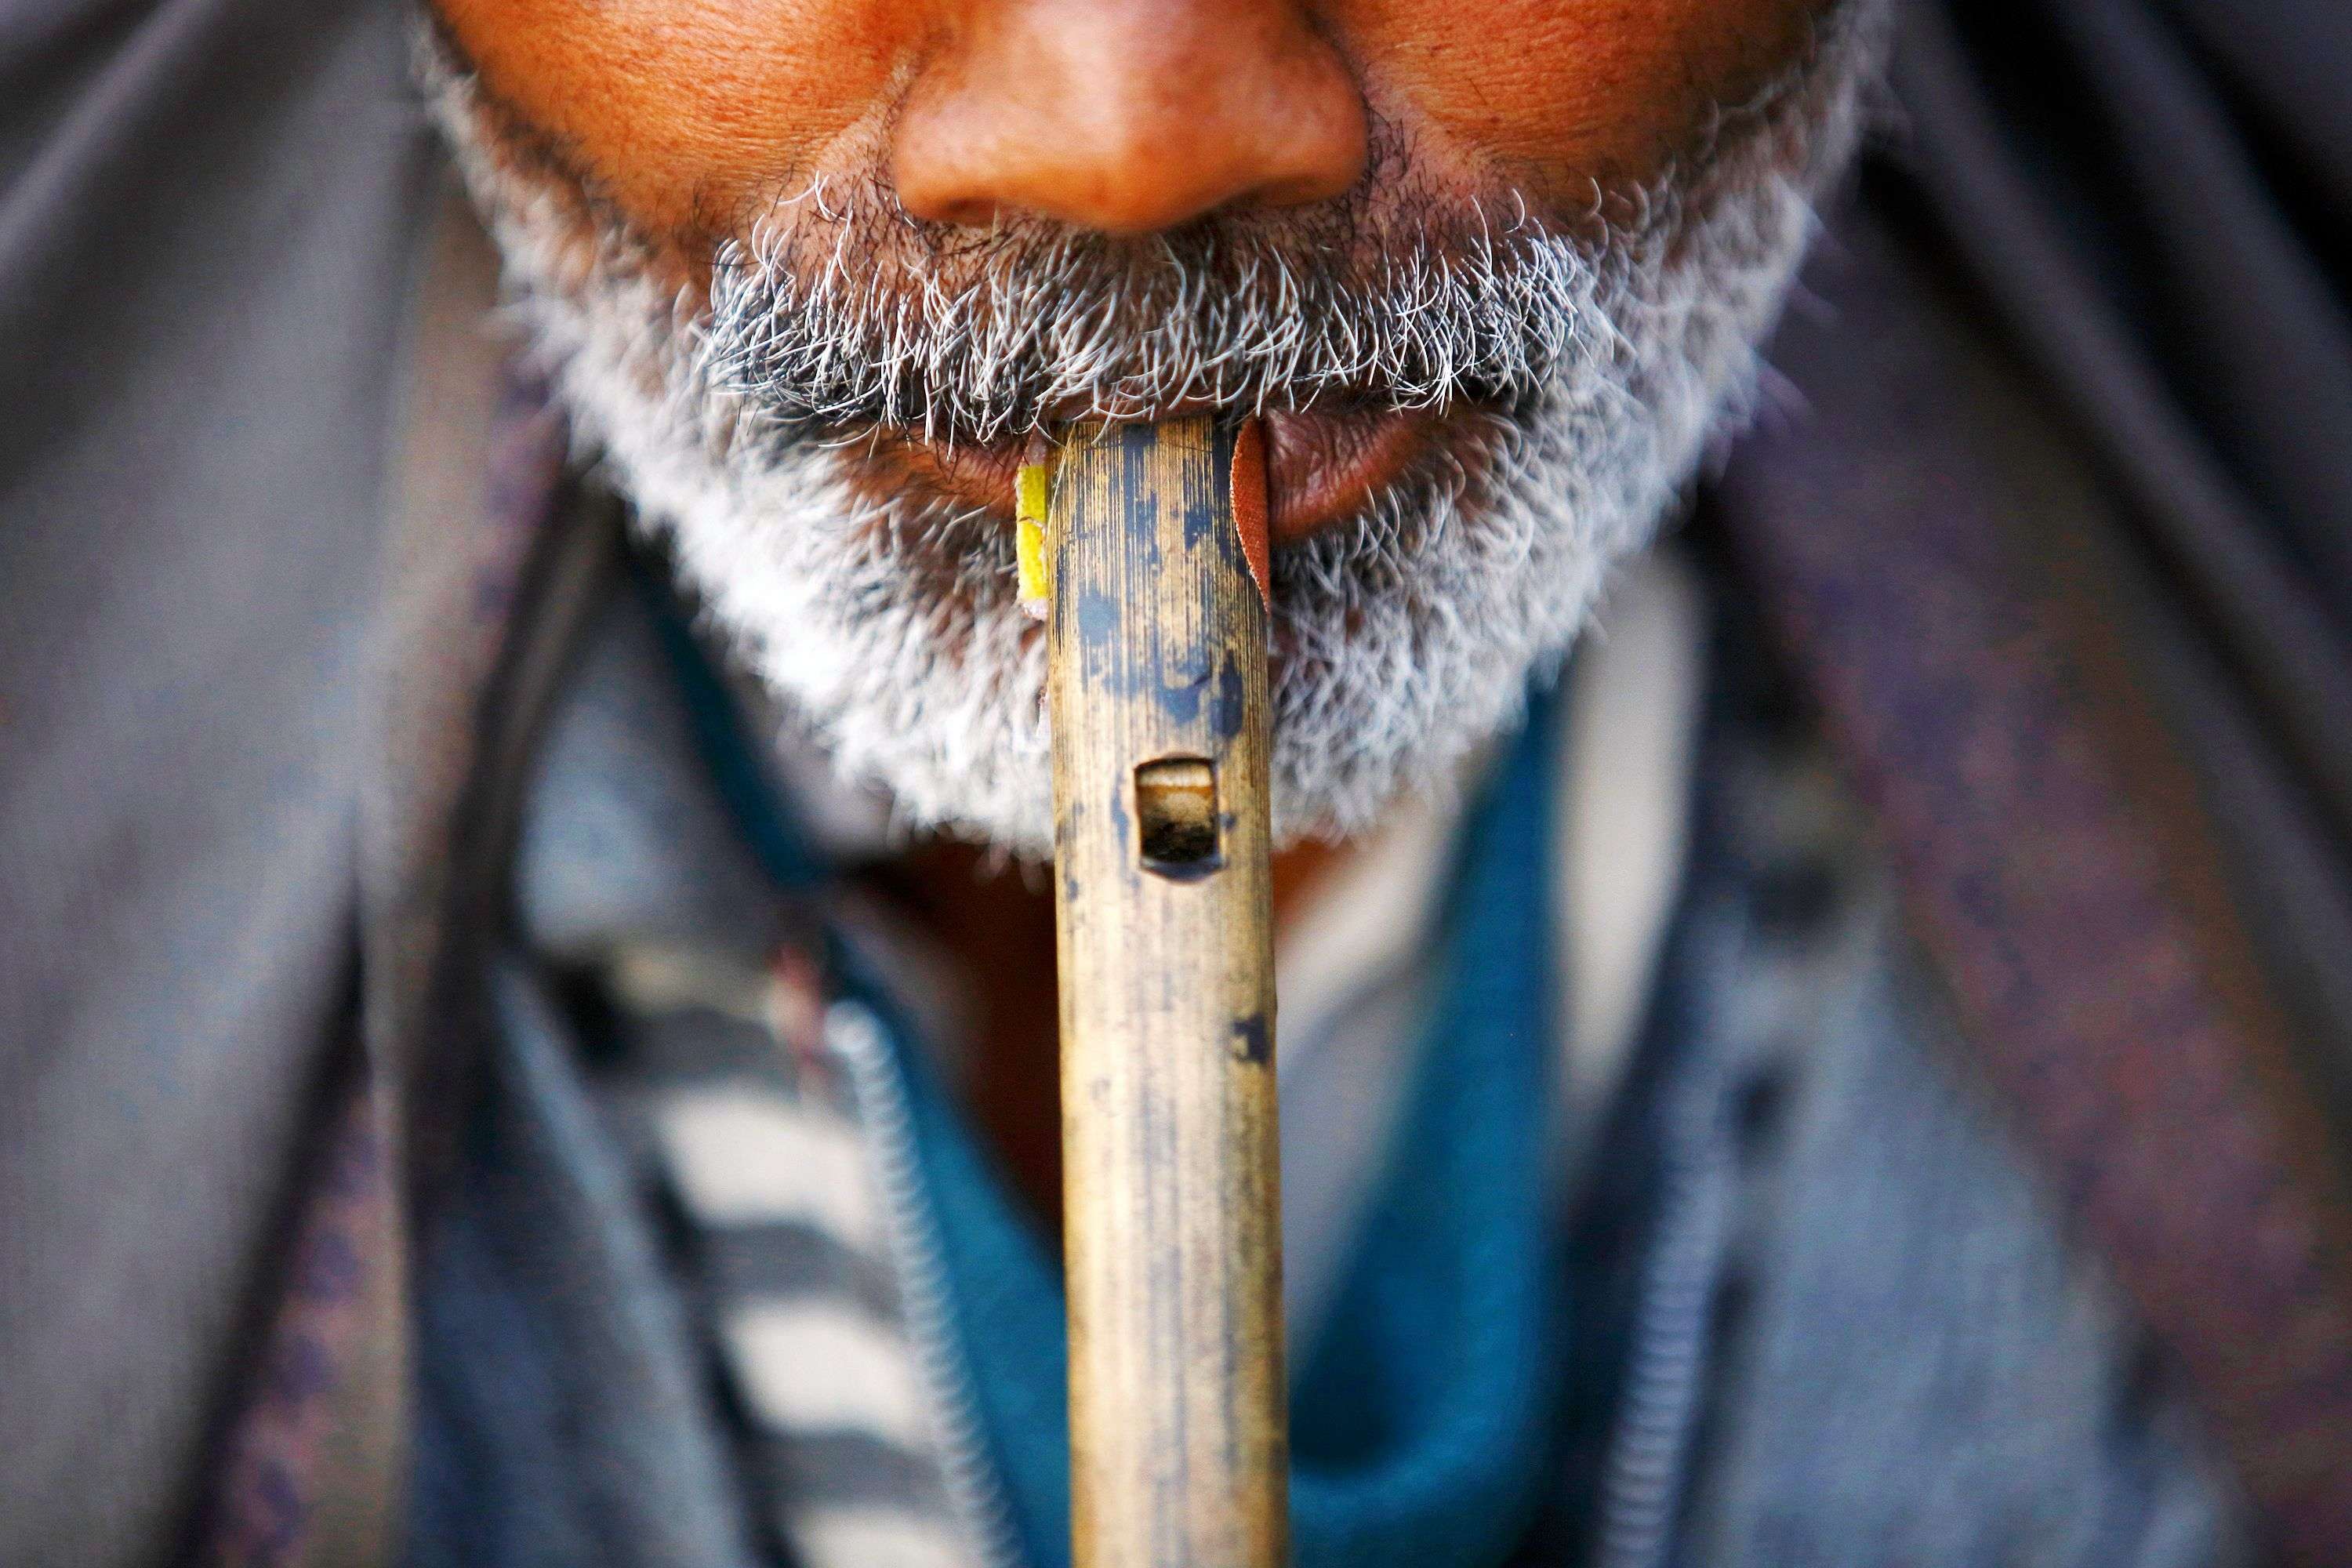 A sadhu plays a flute at the premises of Pashupatinath Temple in Kathmandu. (REUTERS/Navesh Chitrakar)